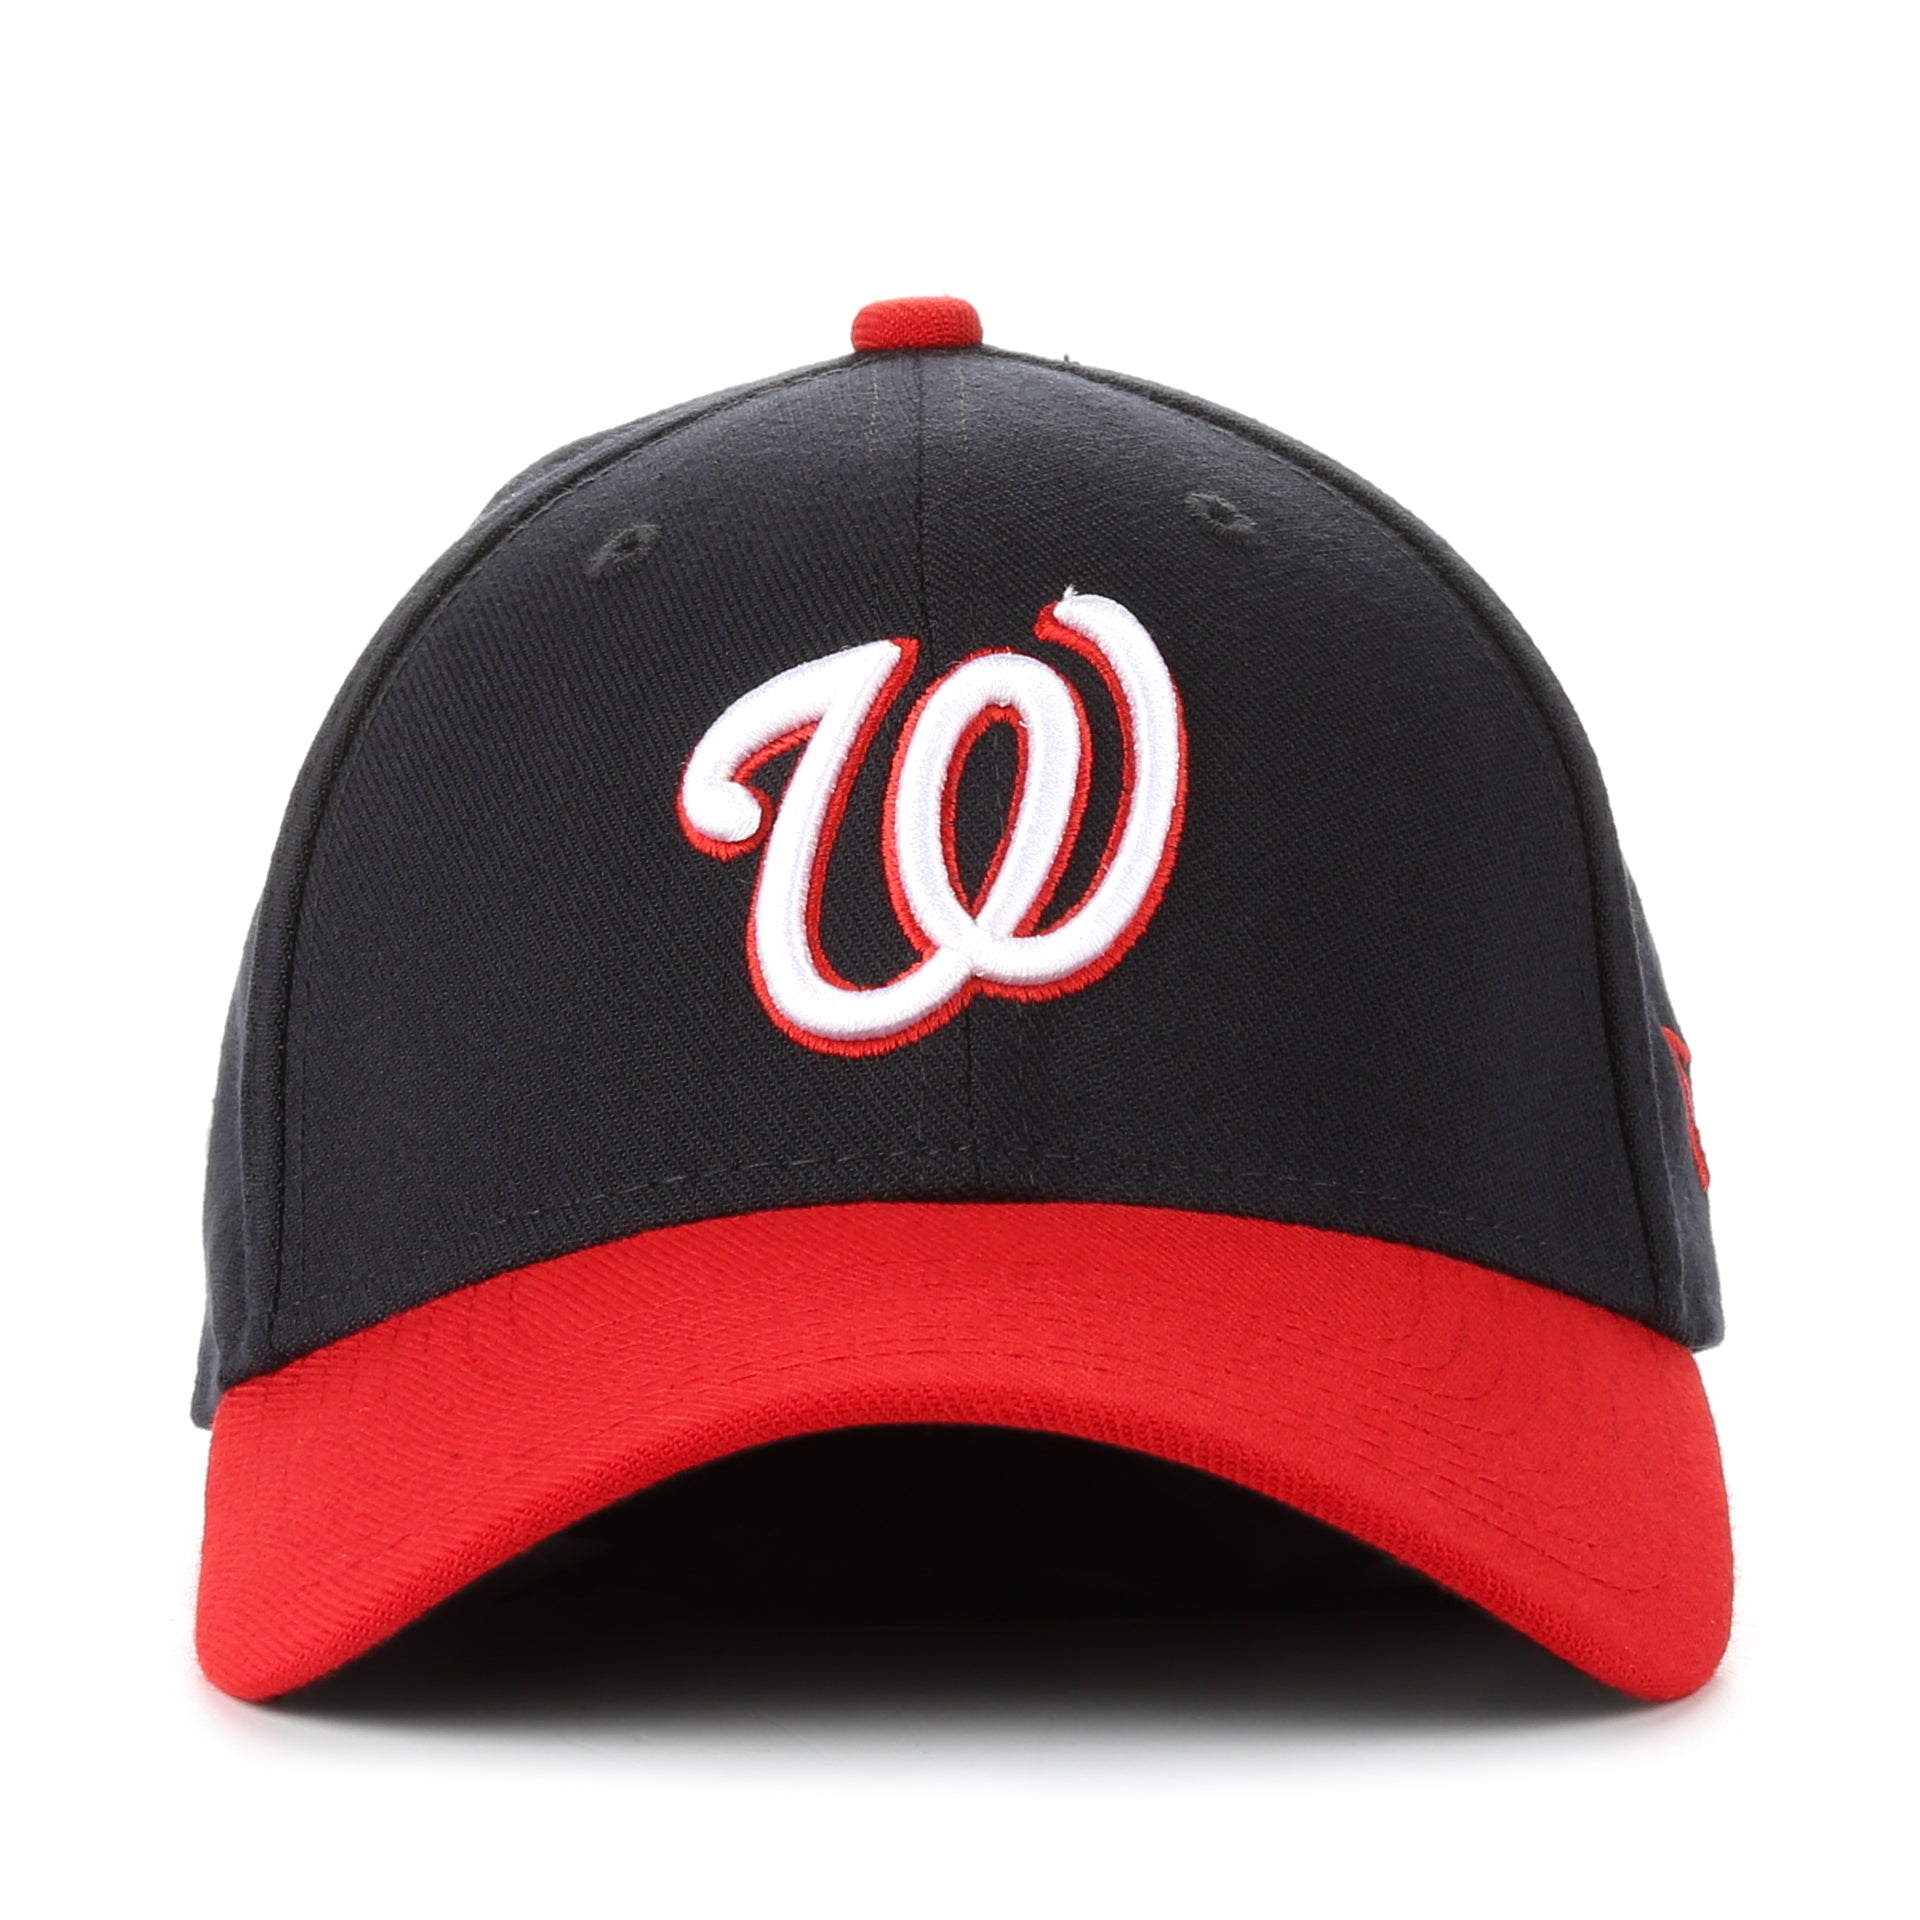 Official Washington Nationals Hats, Nationals Cap, Nationals Hats, Beanies